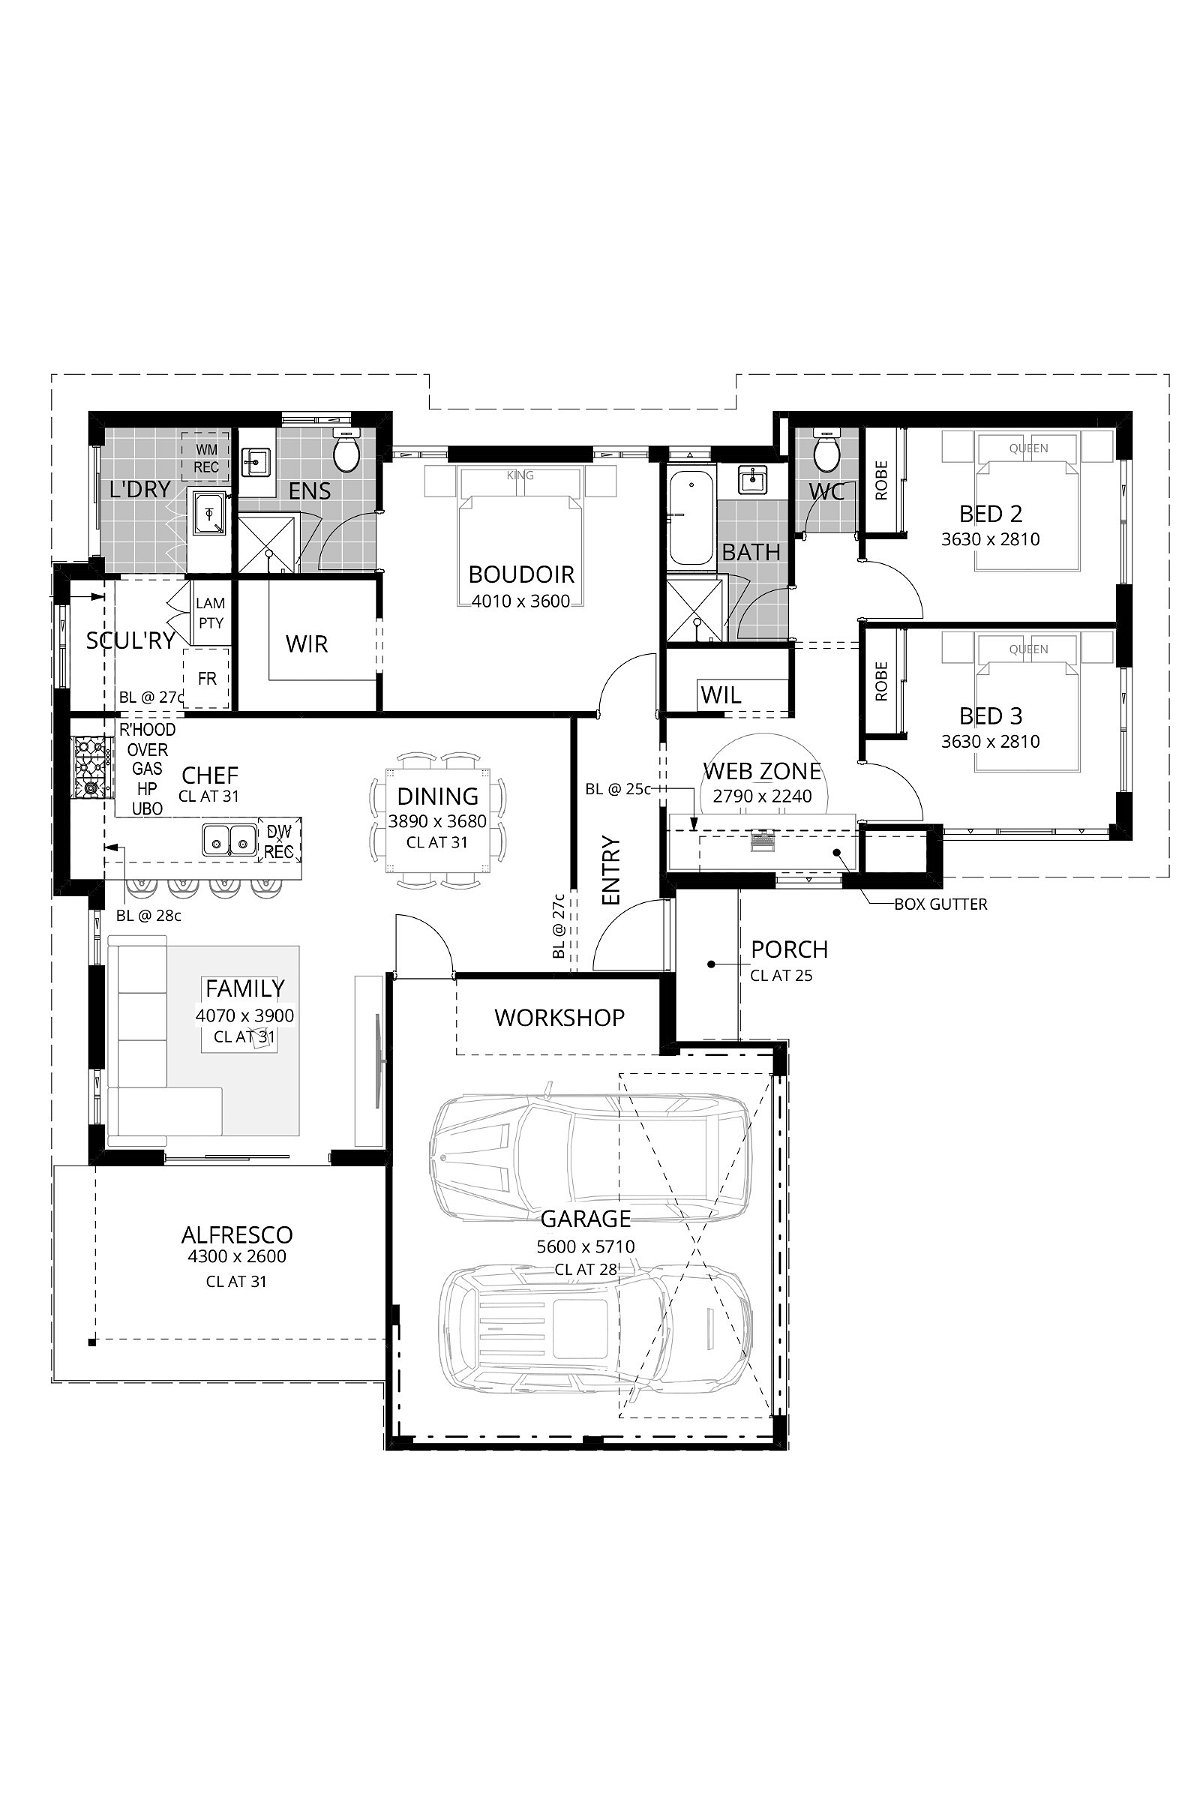 Residential Attitudes - Victory Lap - Floorplan - Victory Lap Website Floorplan